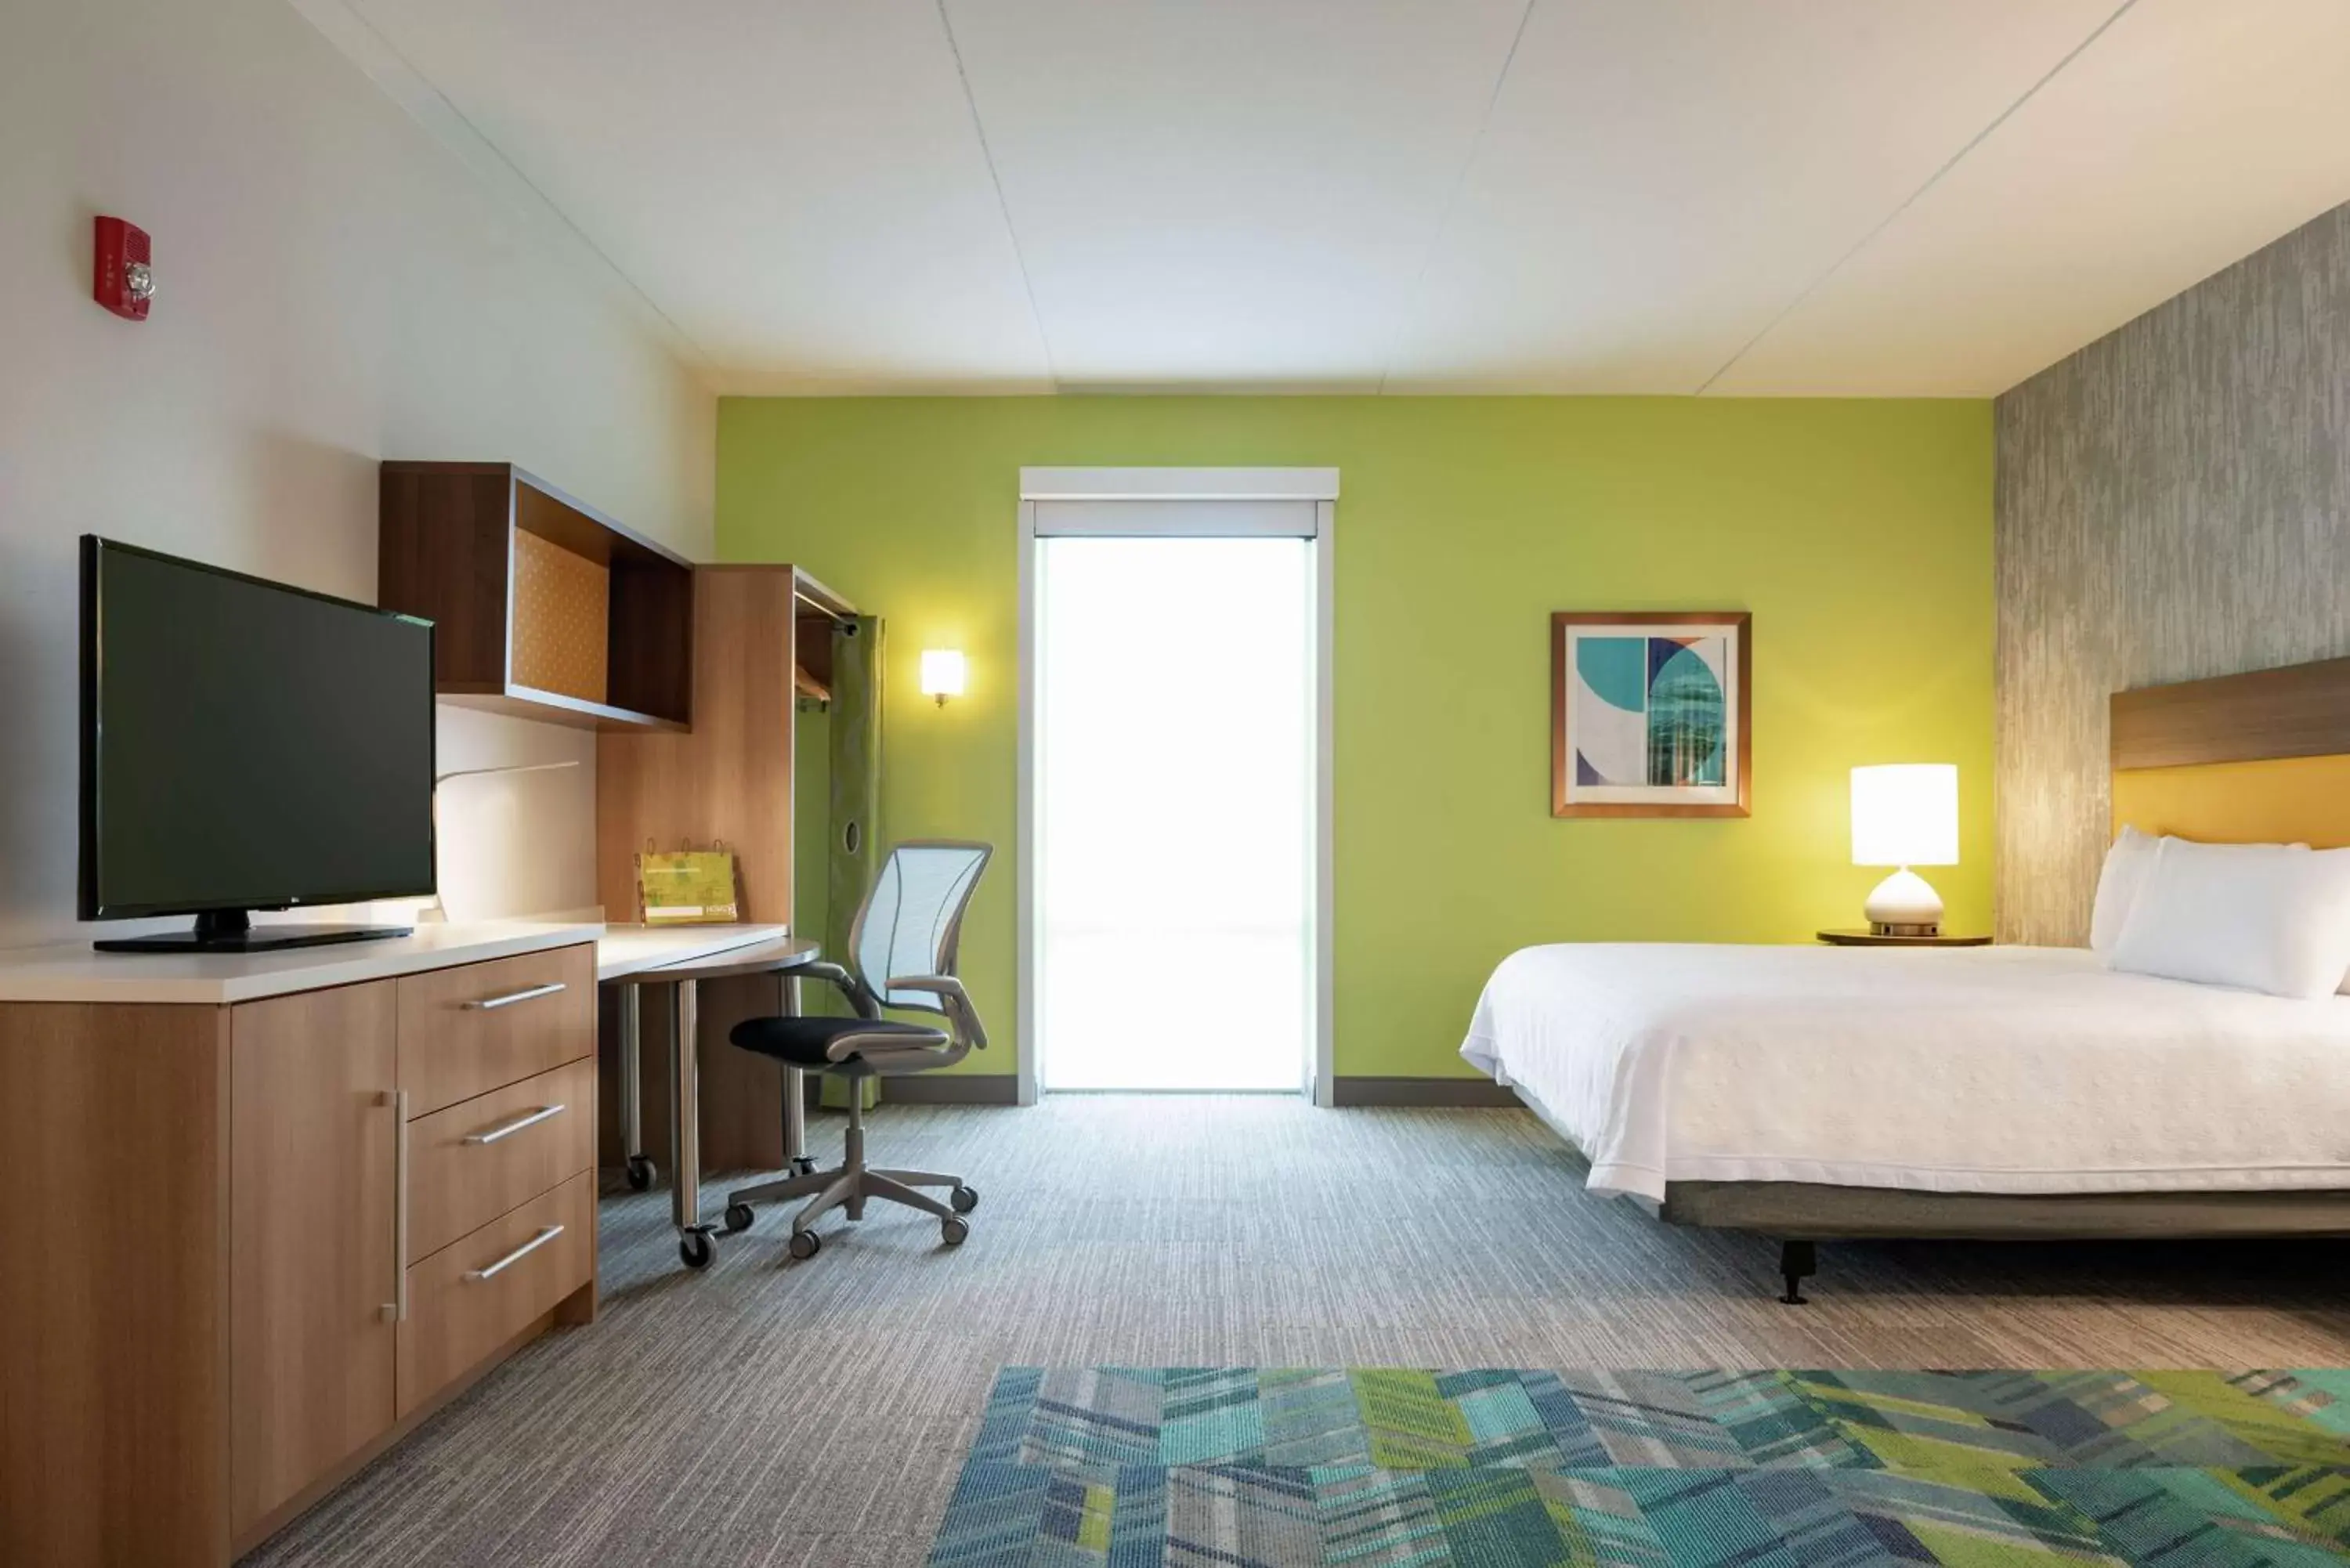 Bedroom, TV/Entertainment Center in Home2 Suites By Hilton Dayton/Beavercreek, Oh